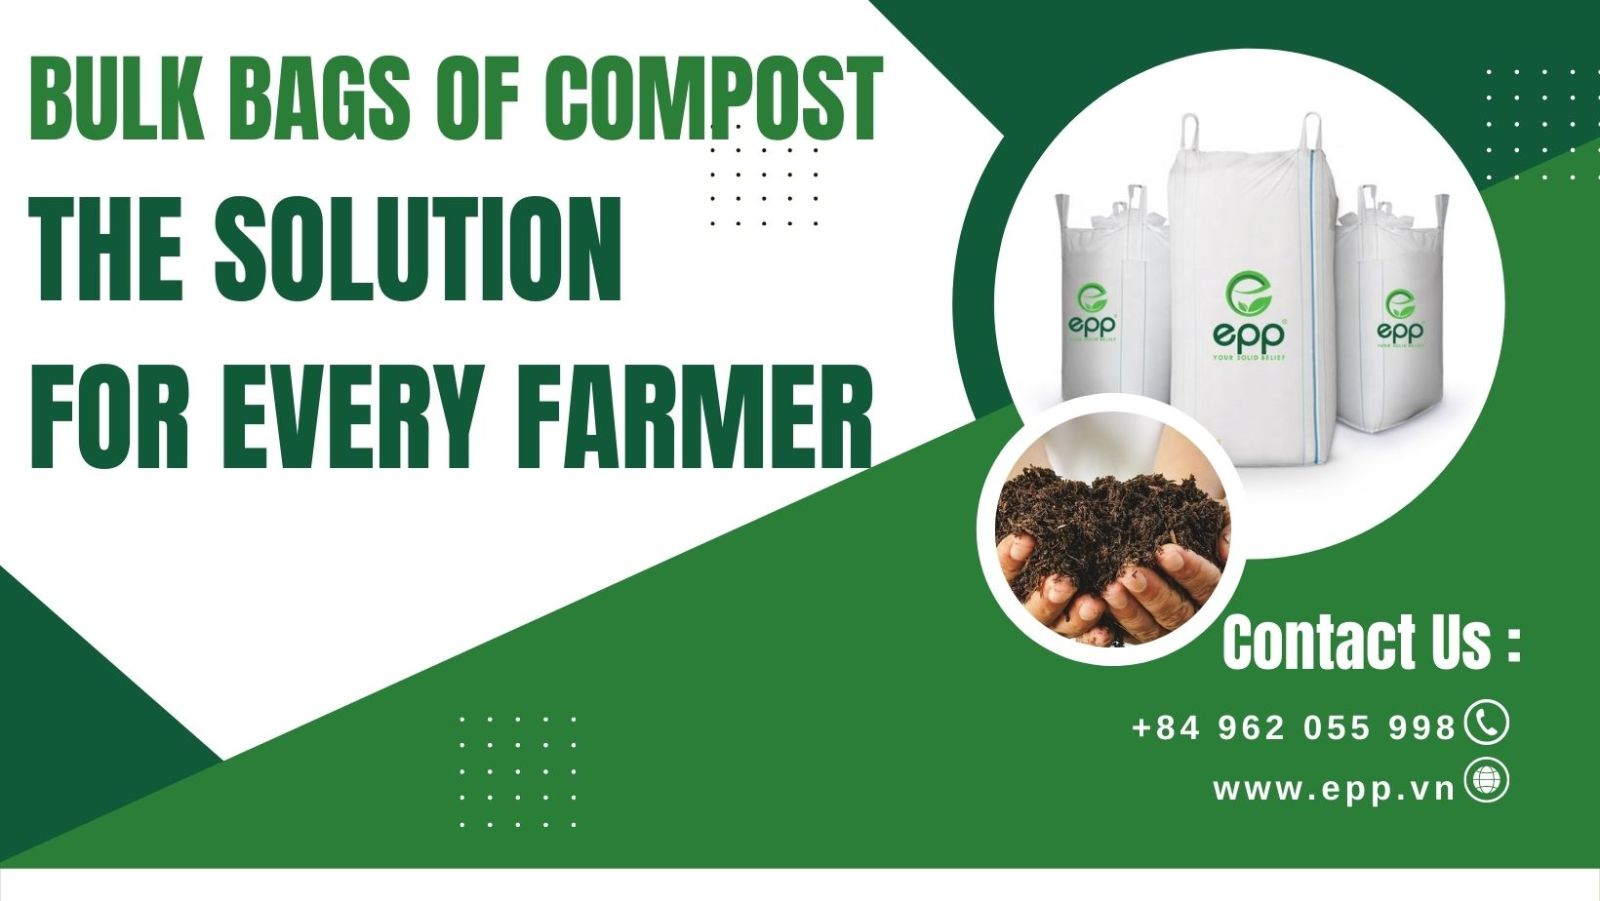 Bulk-bags-of-compost-the-solution-for-every-farmer.jpg